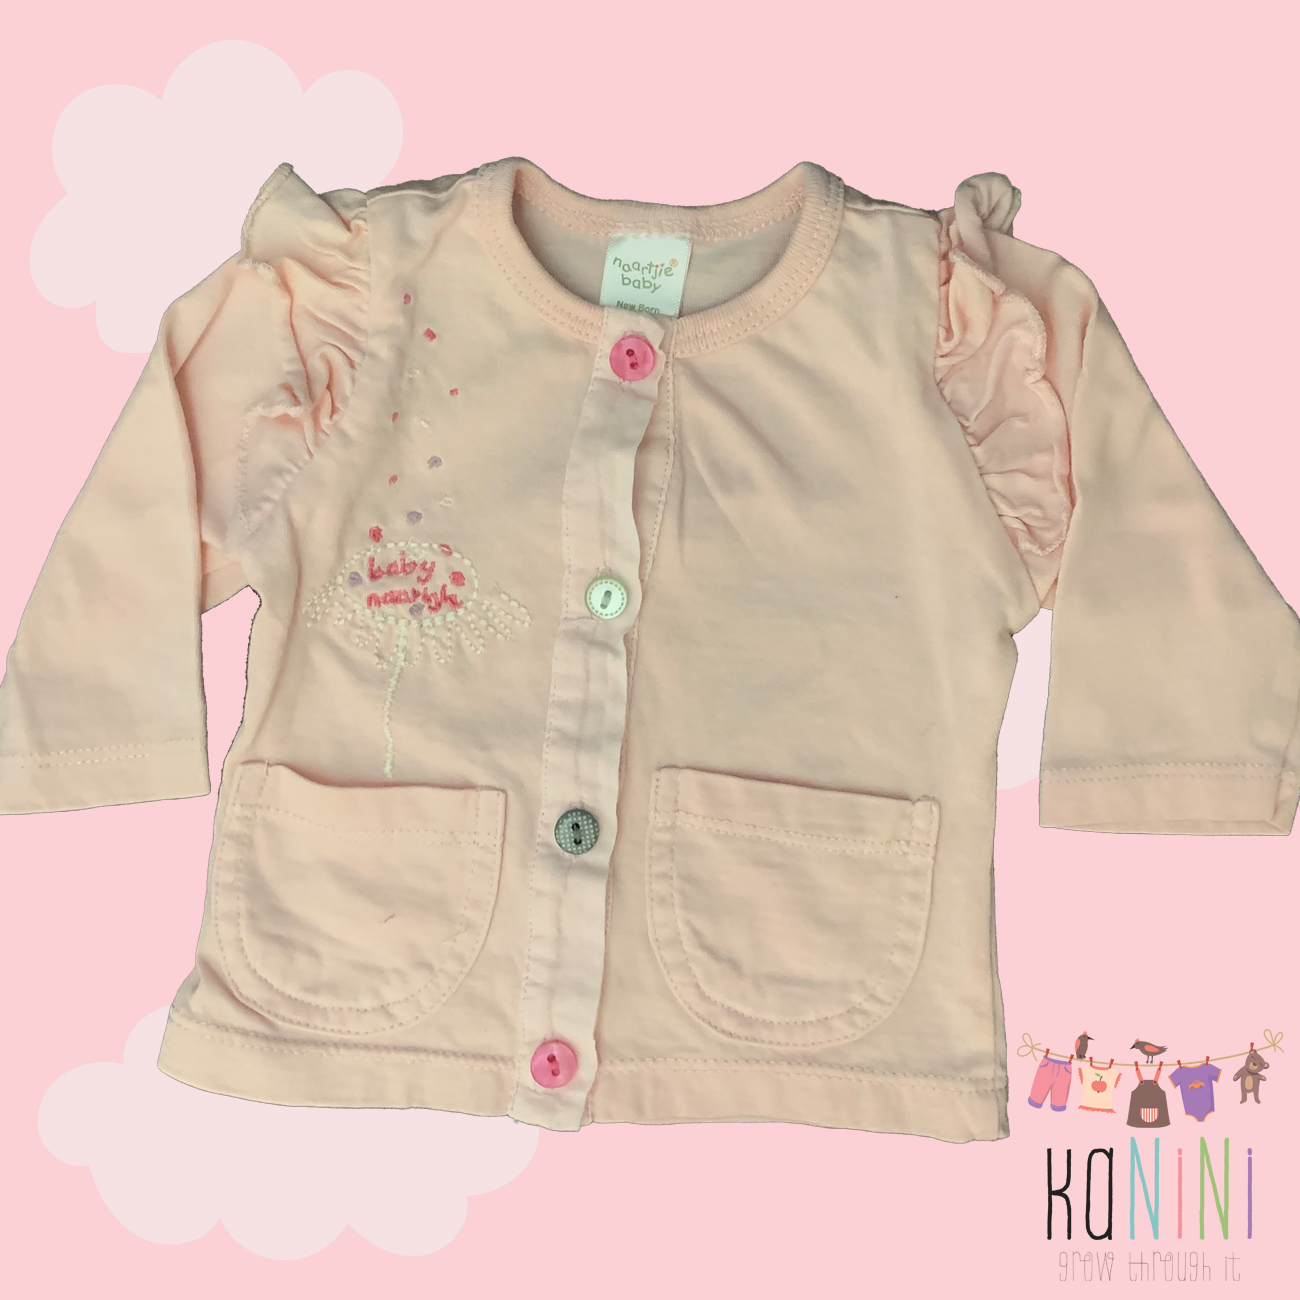 Featured image for “Naartjie Newborn Girls Button T-Shirt”